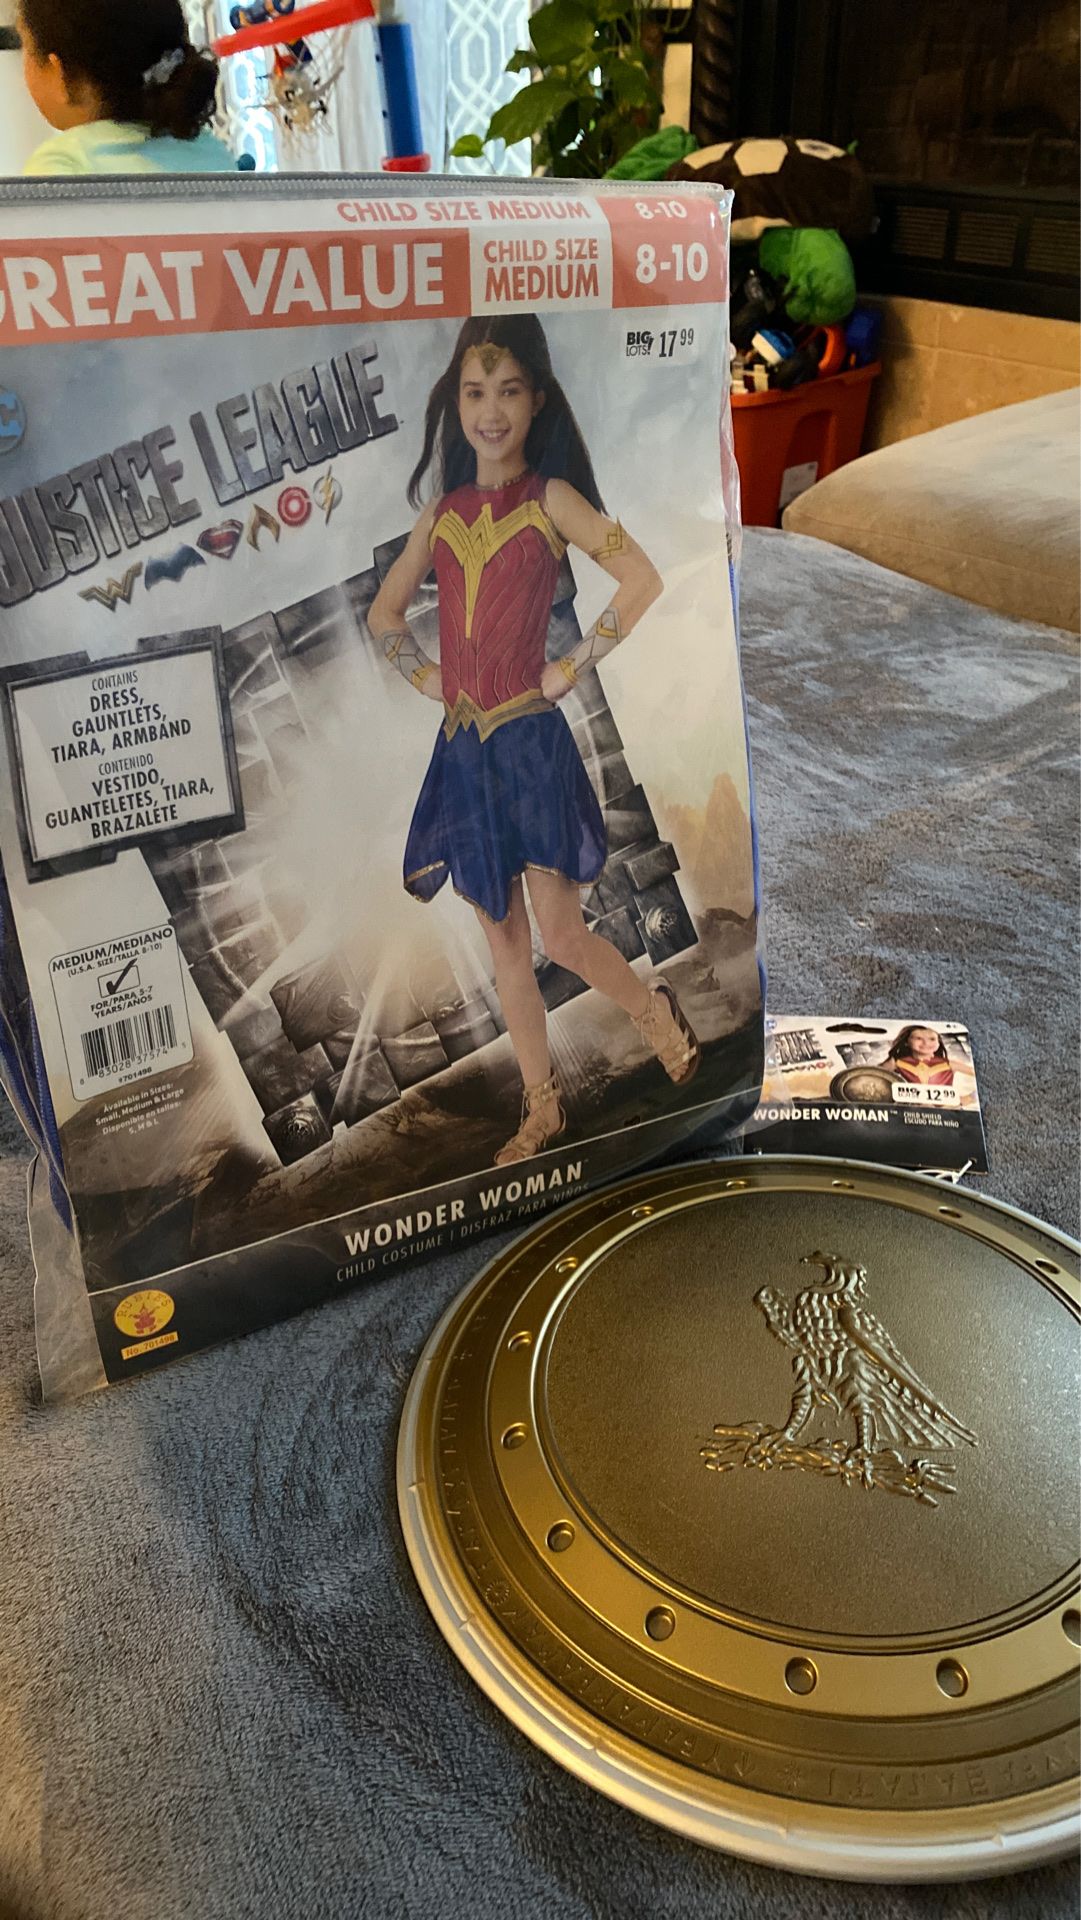 Wonder Woman costume and shield